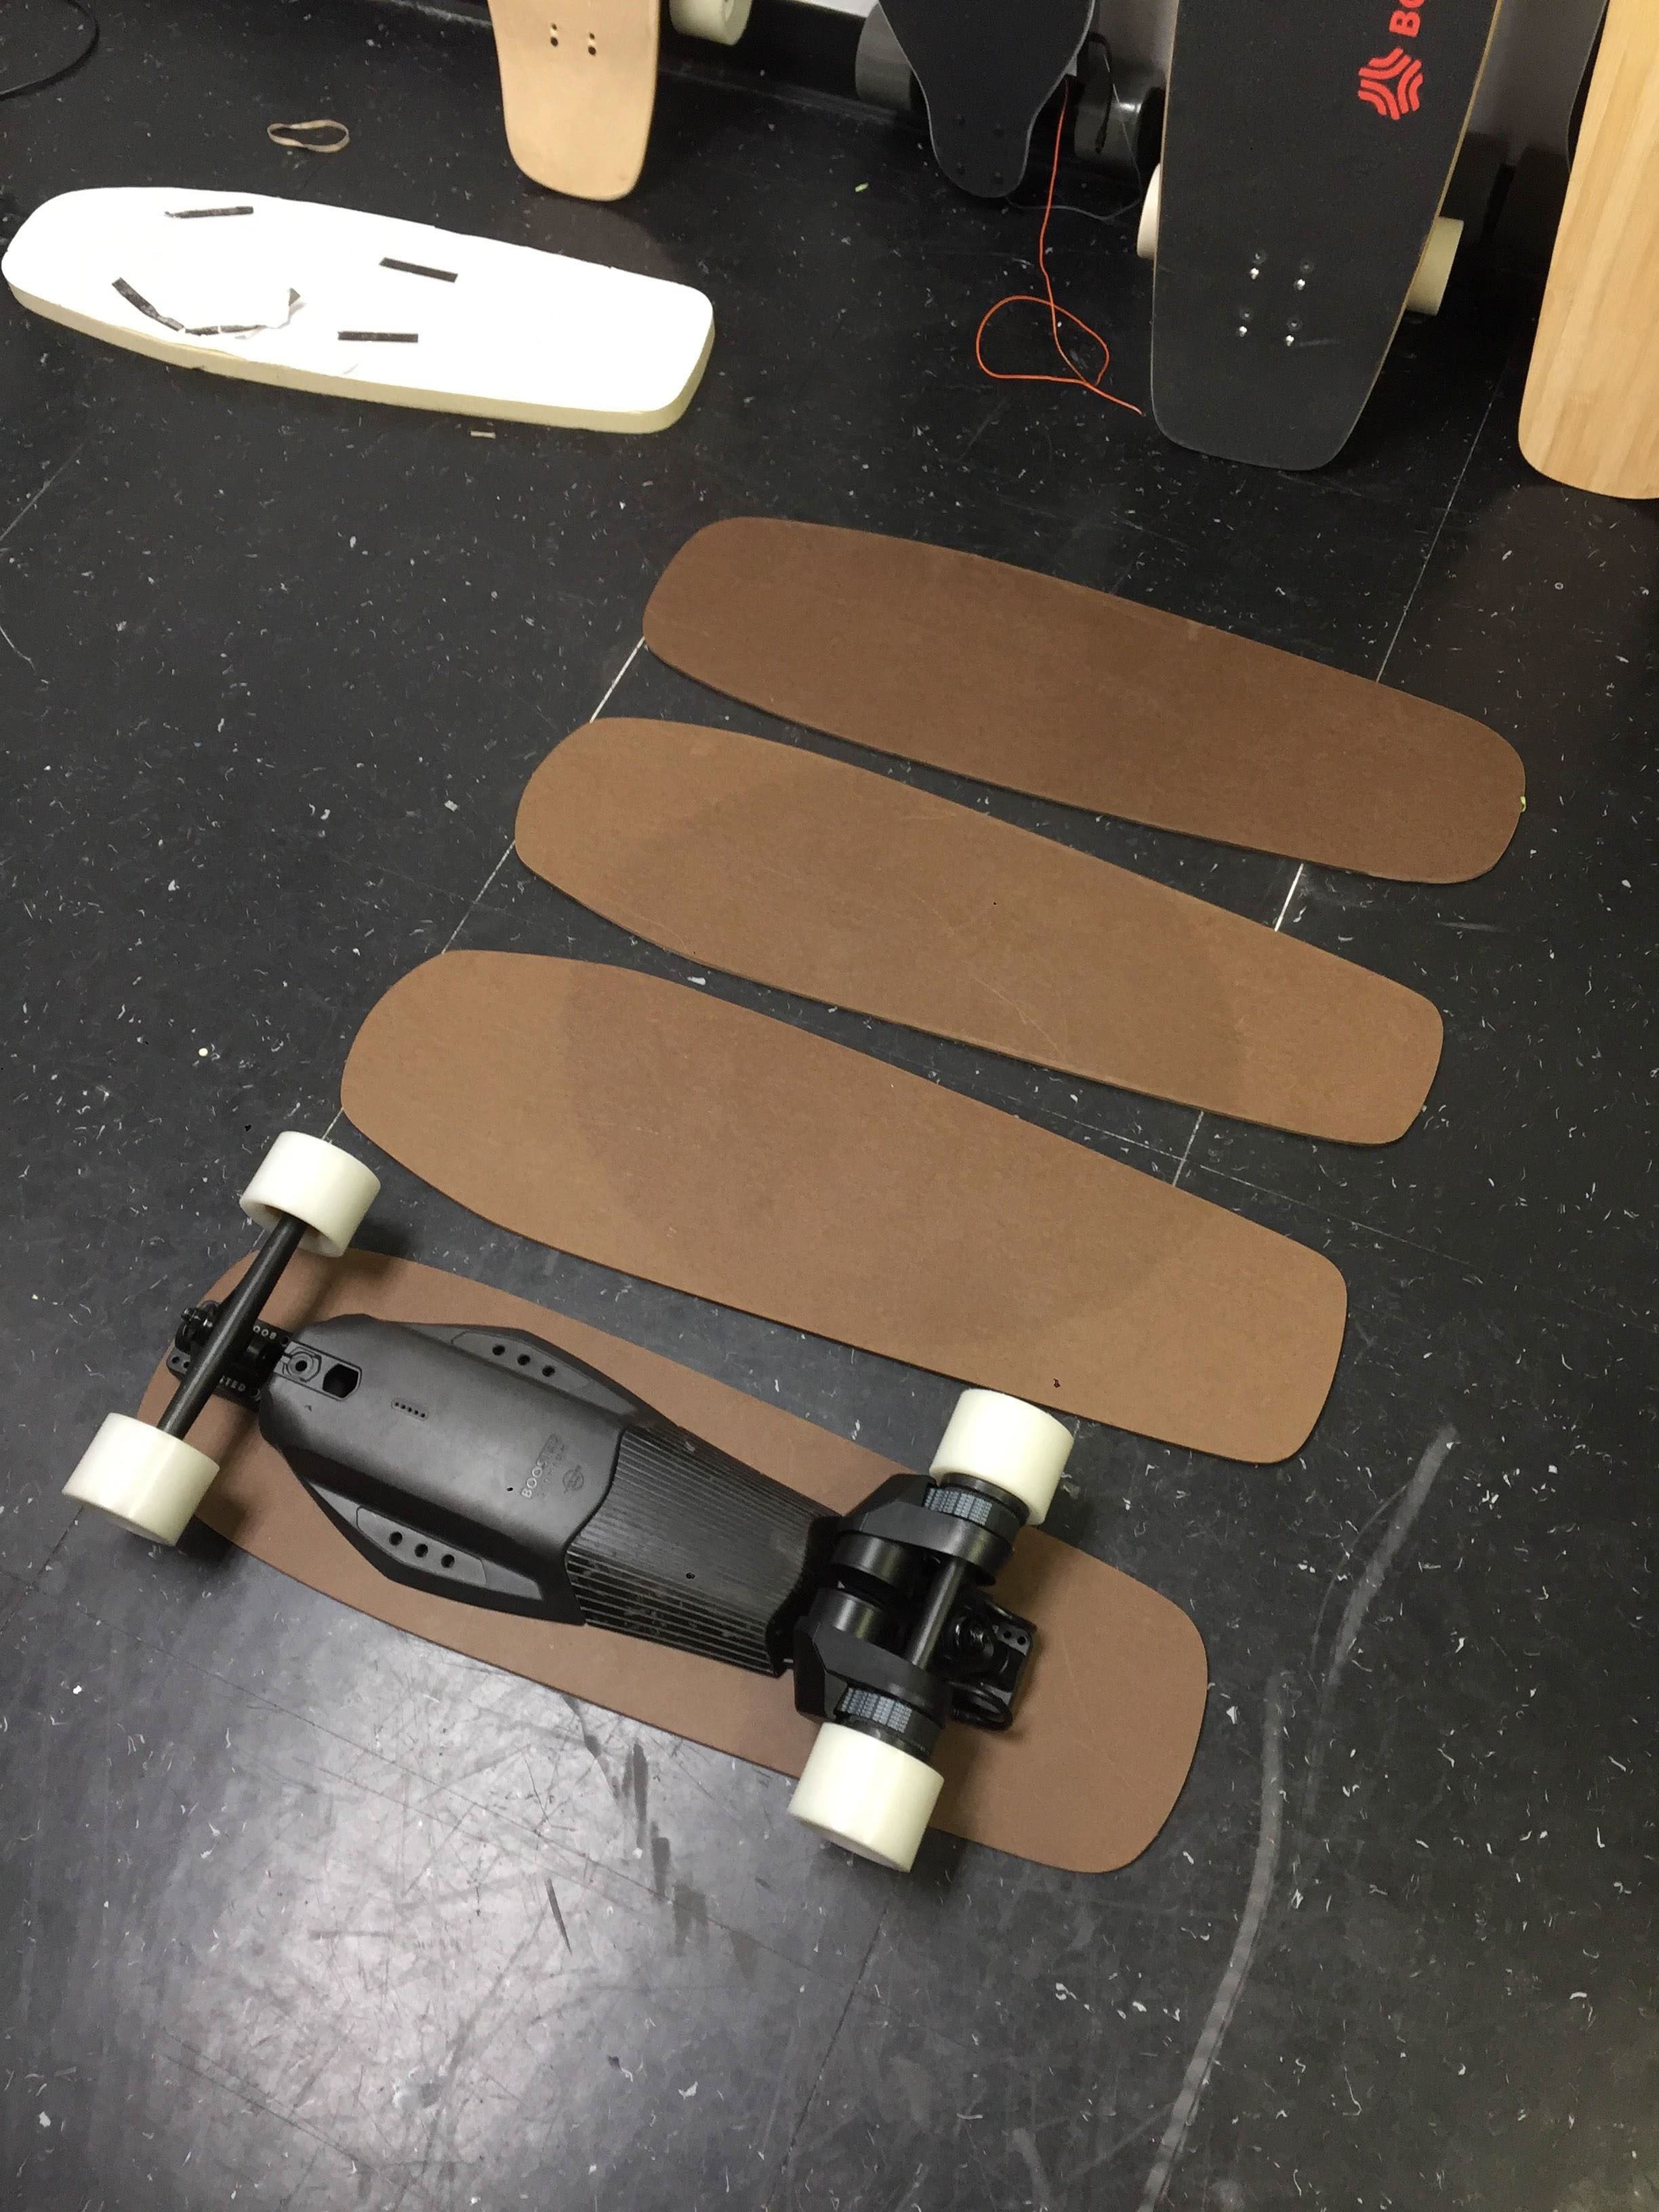 boosted电动滑板,让出行更方便